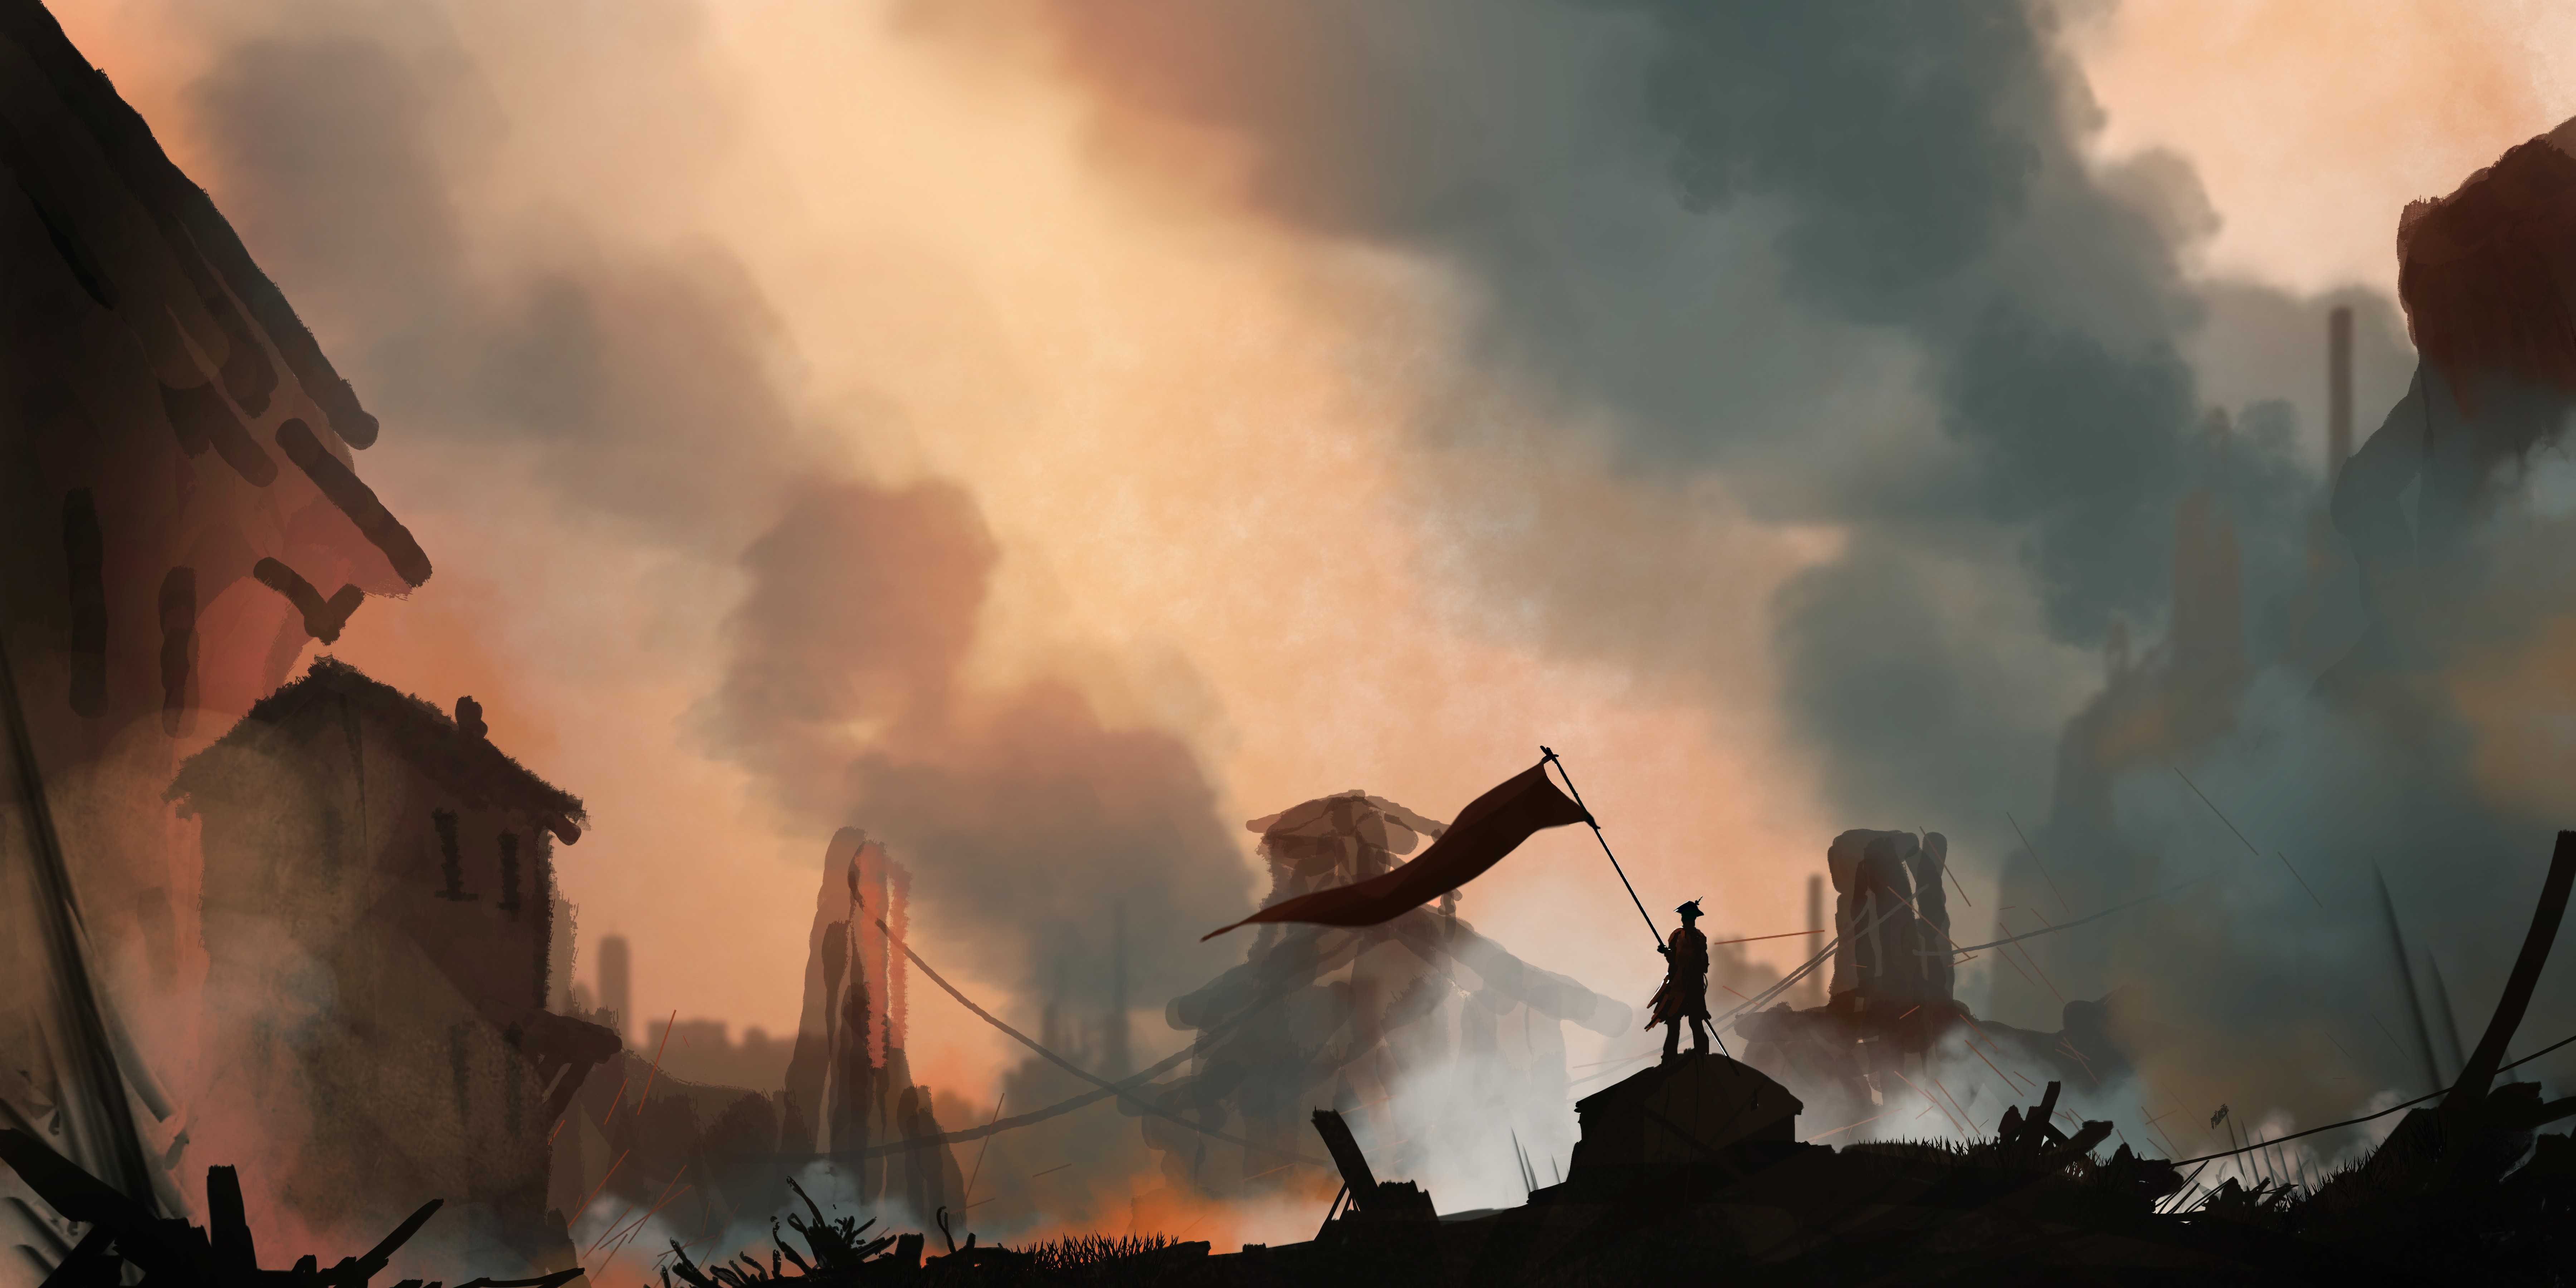 Fantasy Art Mist Warrior Flag Smoke Fire Battlefields Loneliness Hero DeviantArt Digital Art Artwork 7200x3600